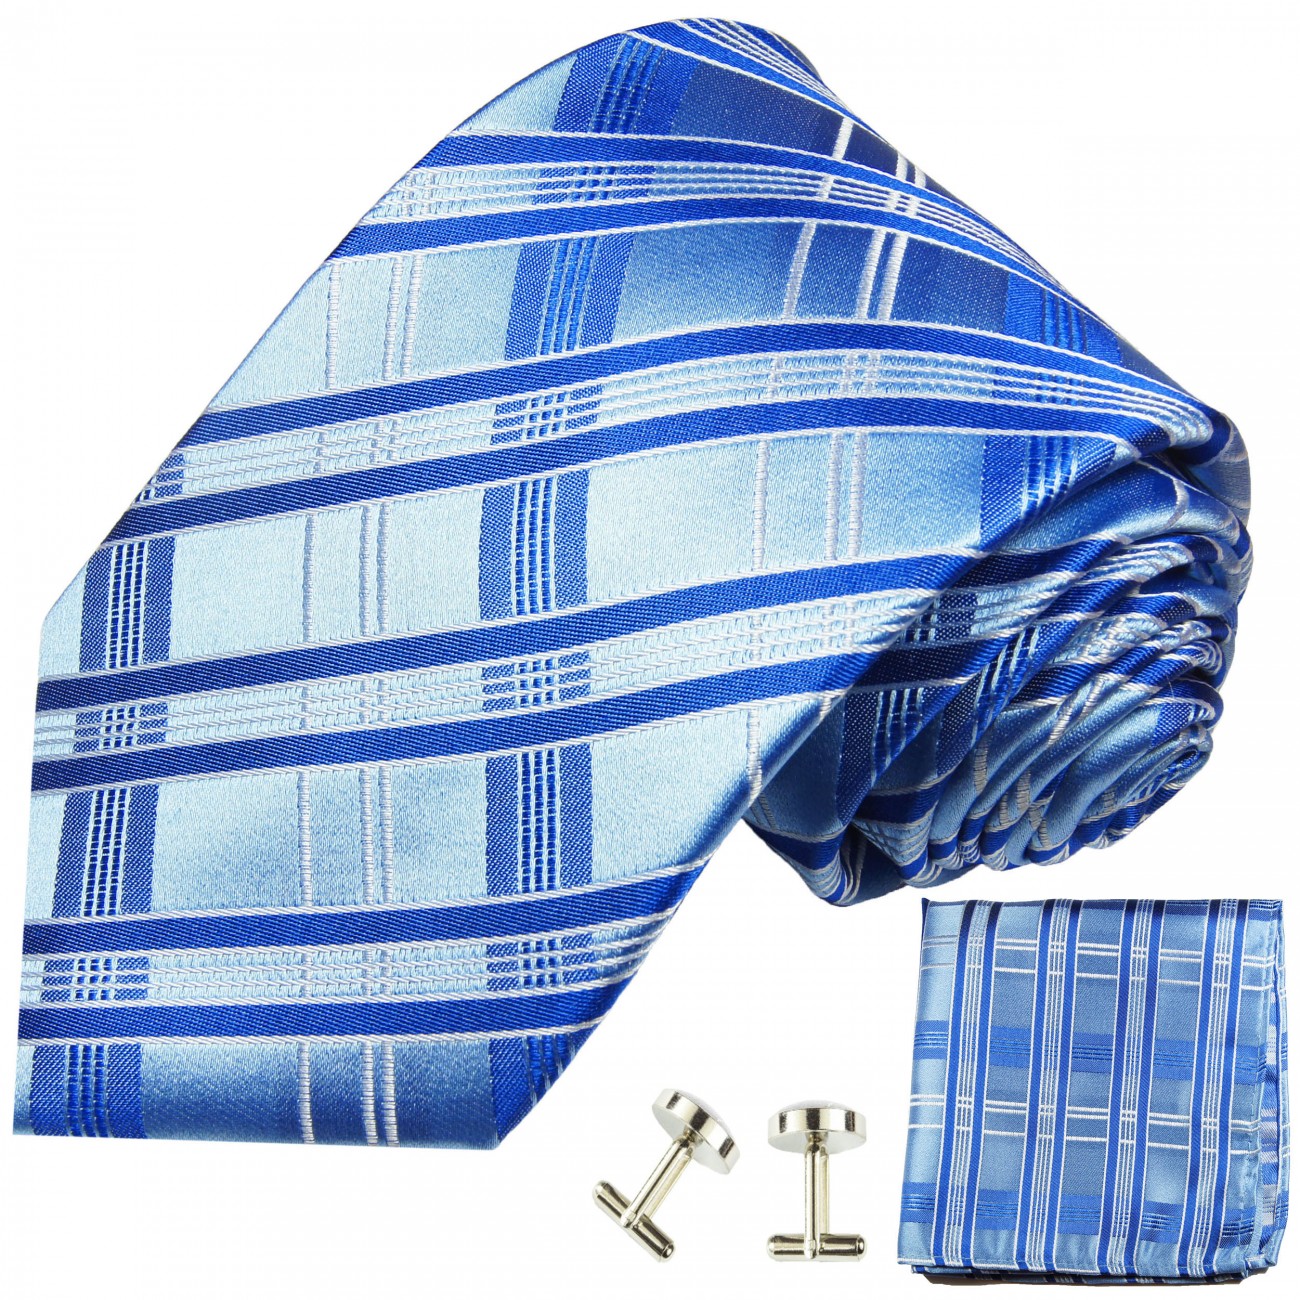 Krawatte blau Seide hellblau und dunkelblau gestreift 2018